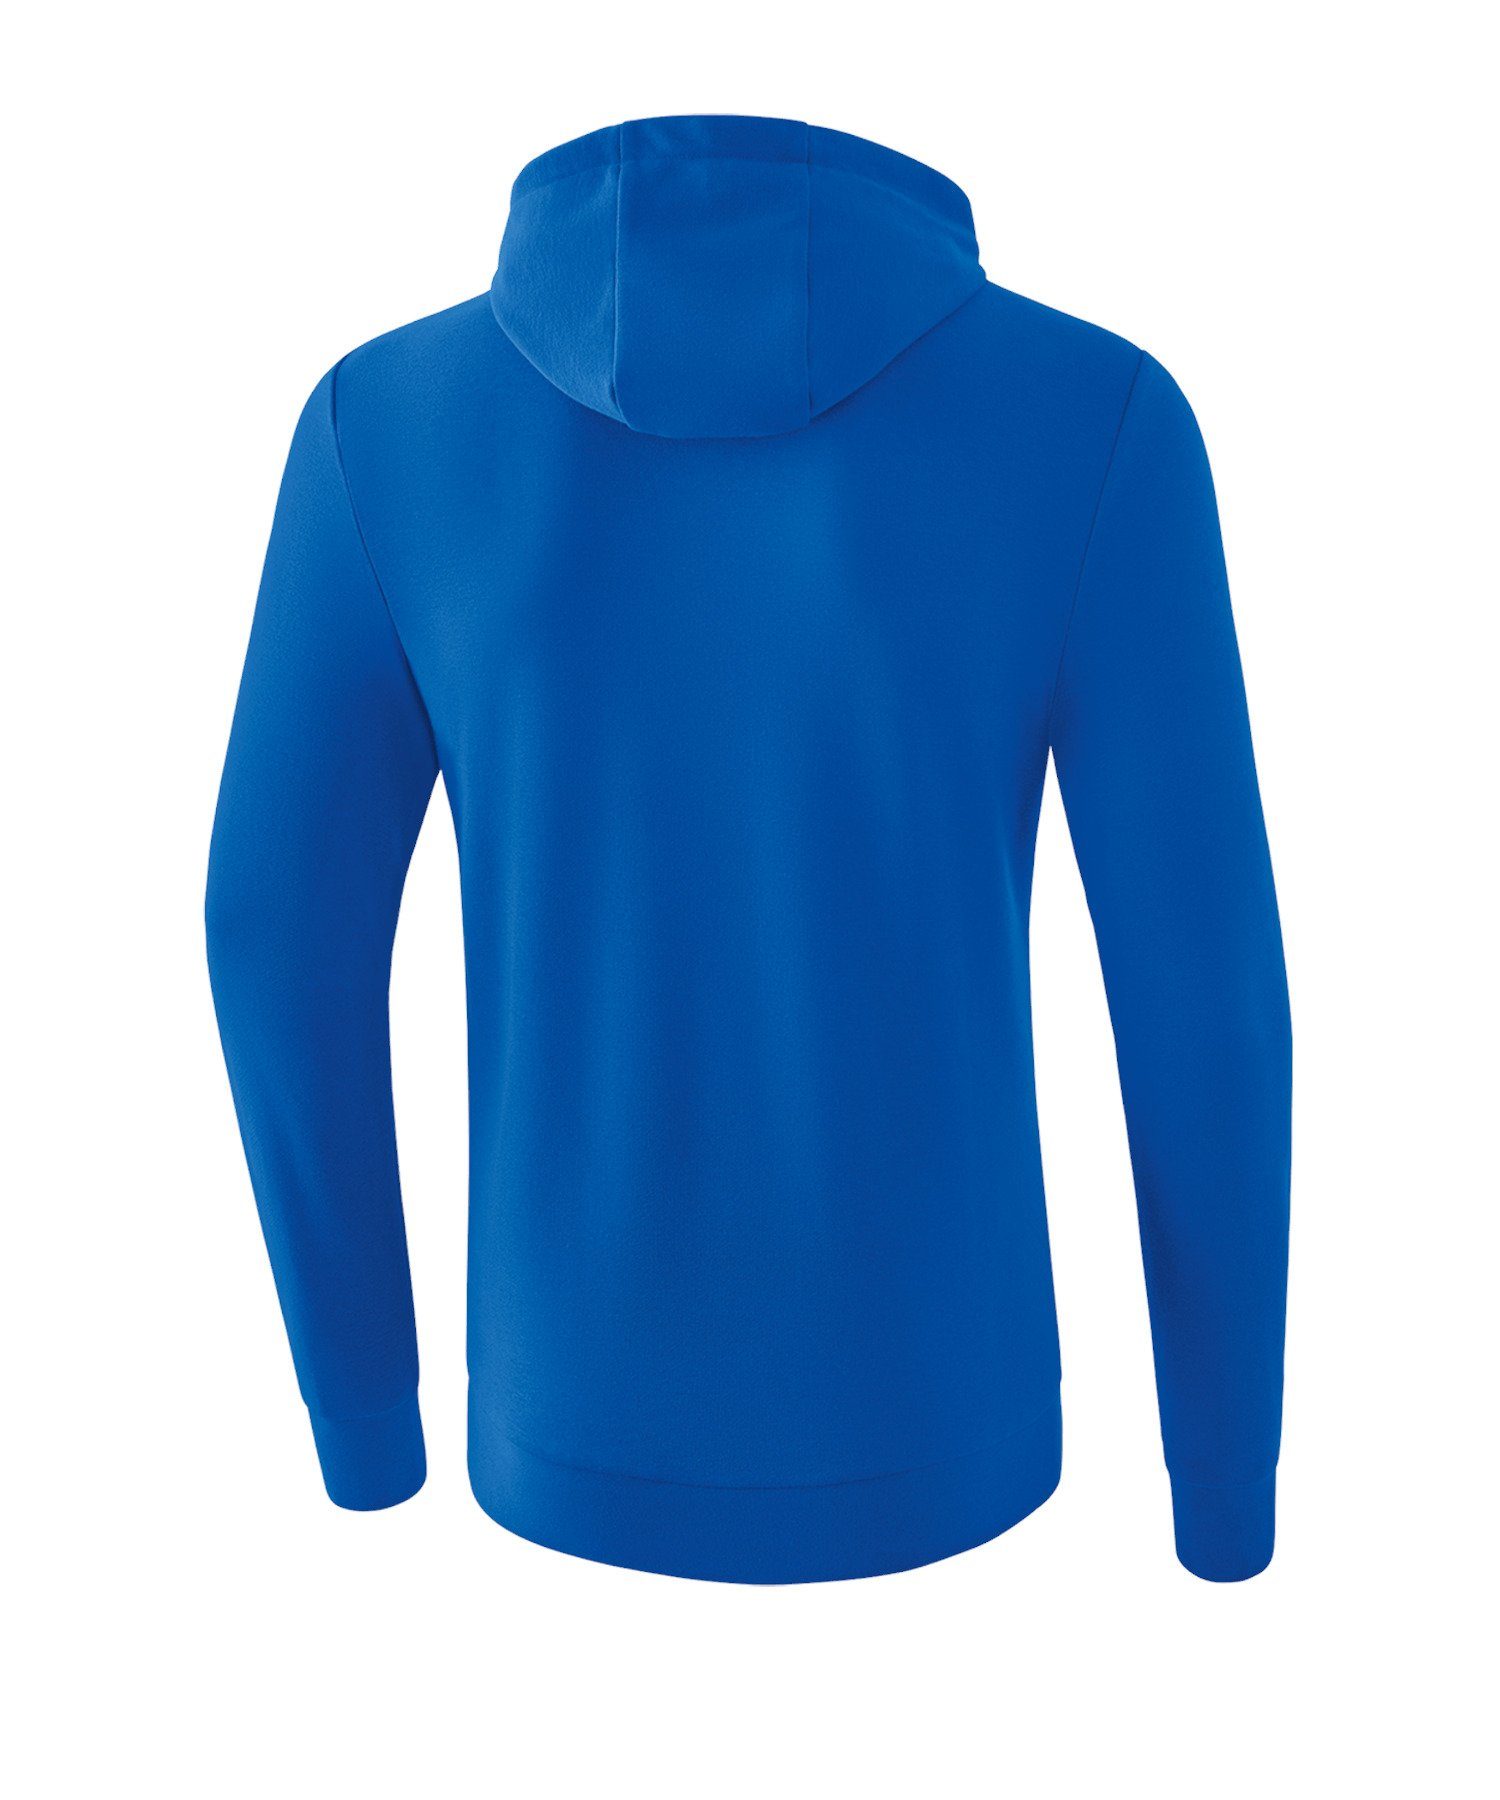 Erima Sweatshirt Basic Hoody blaublau